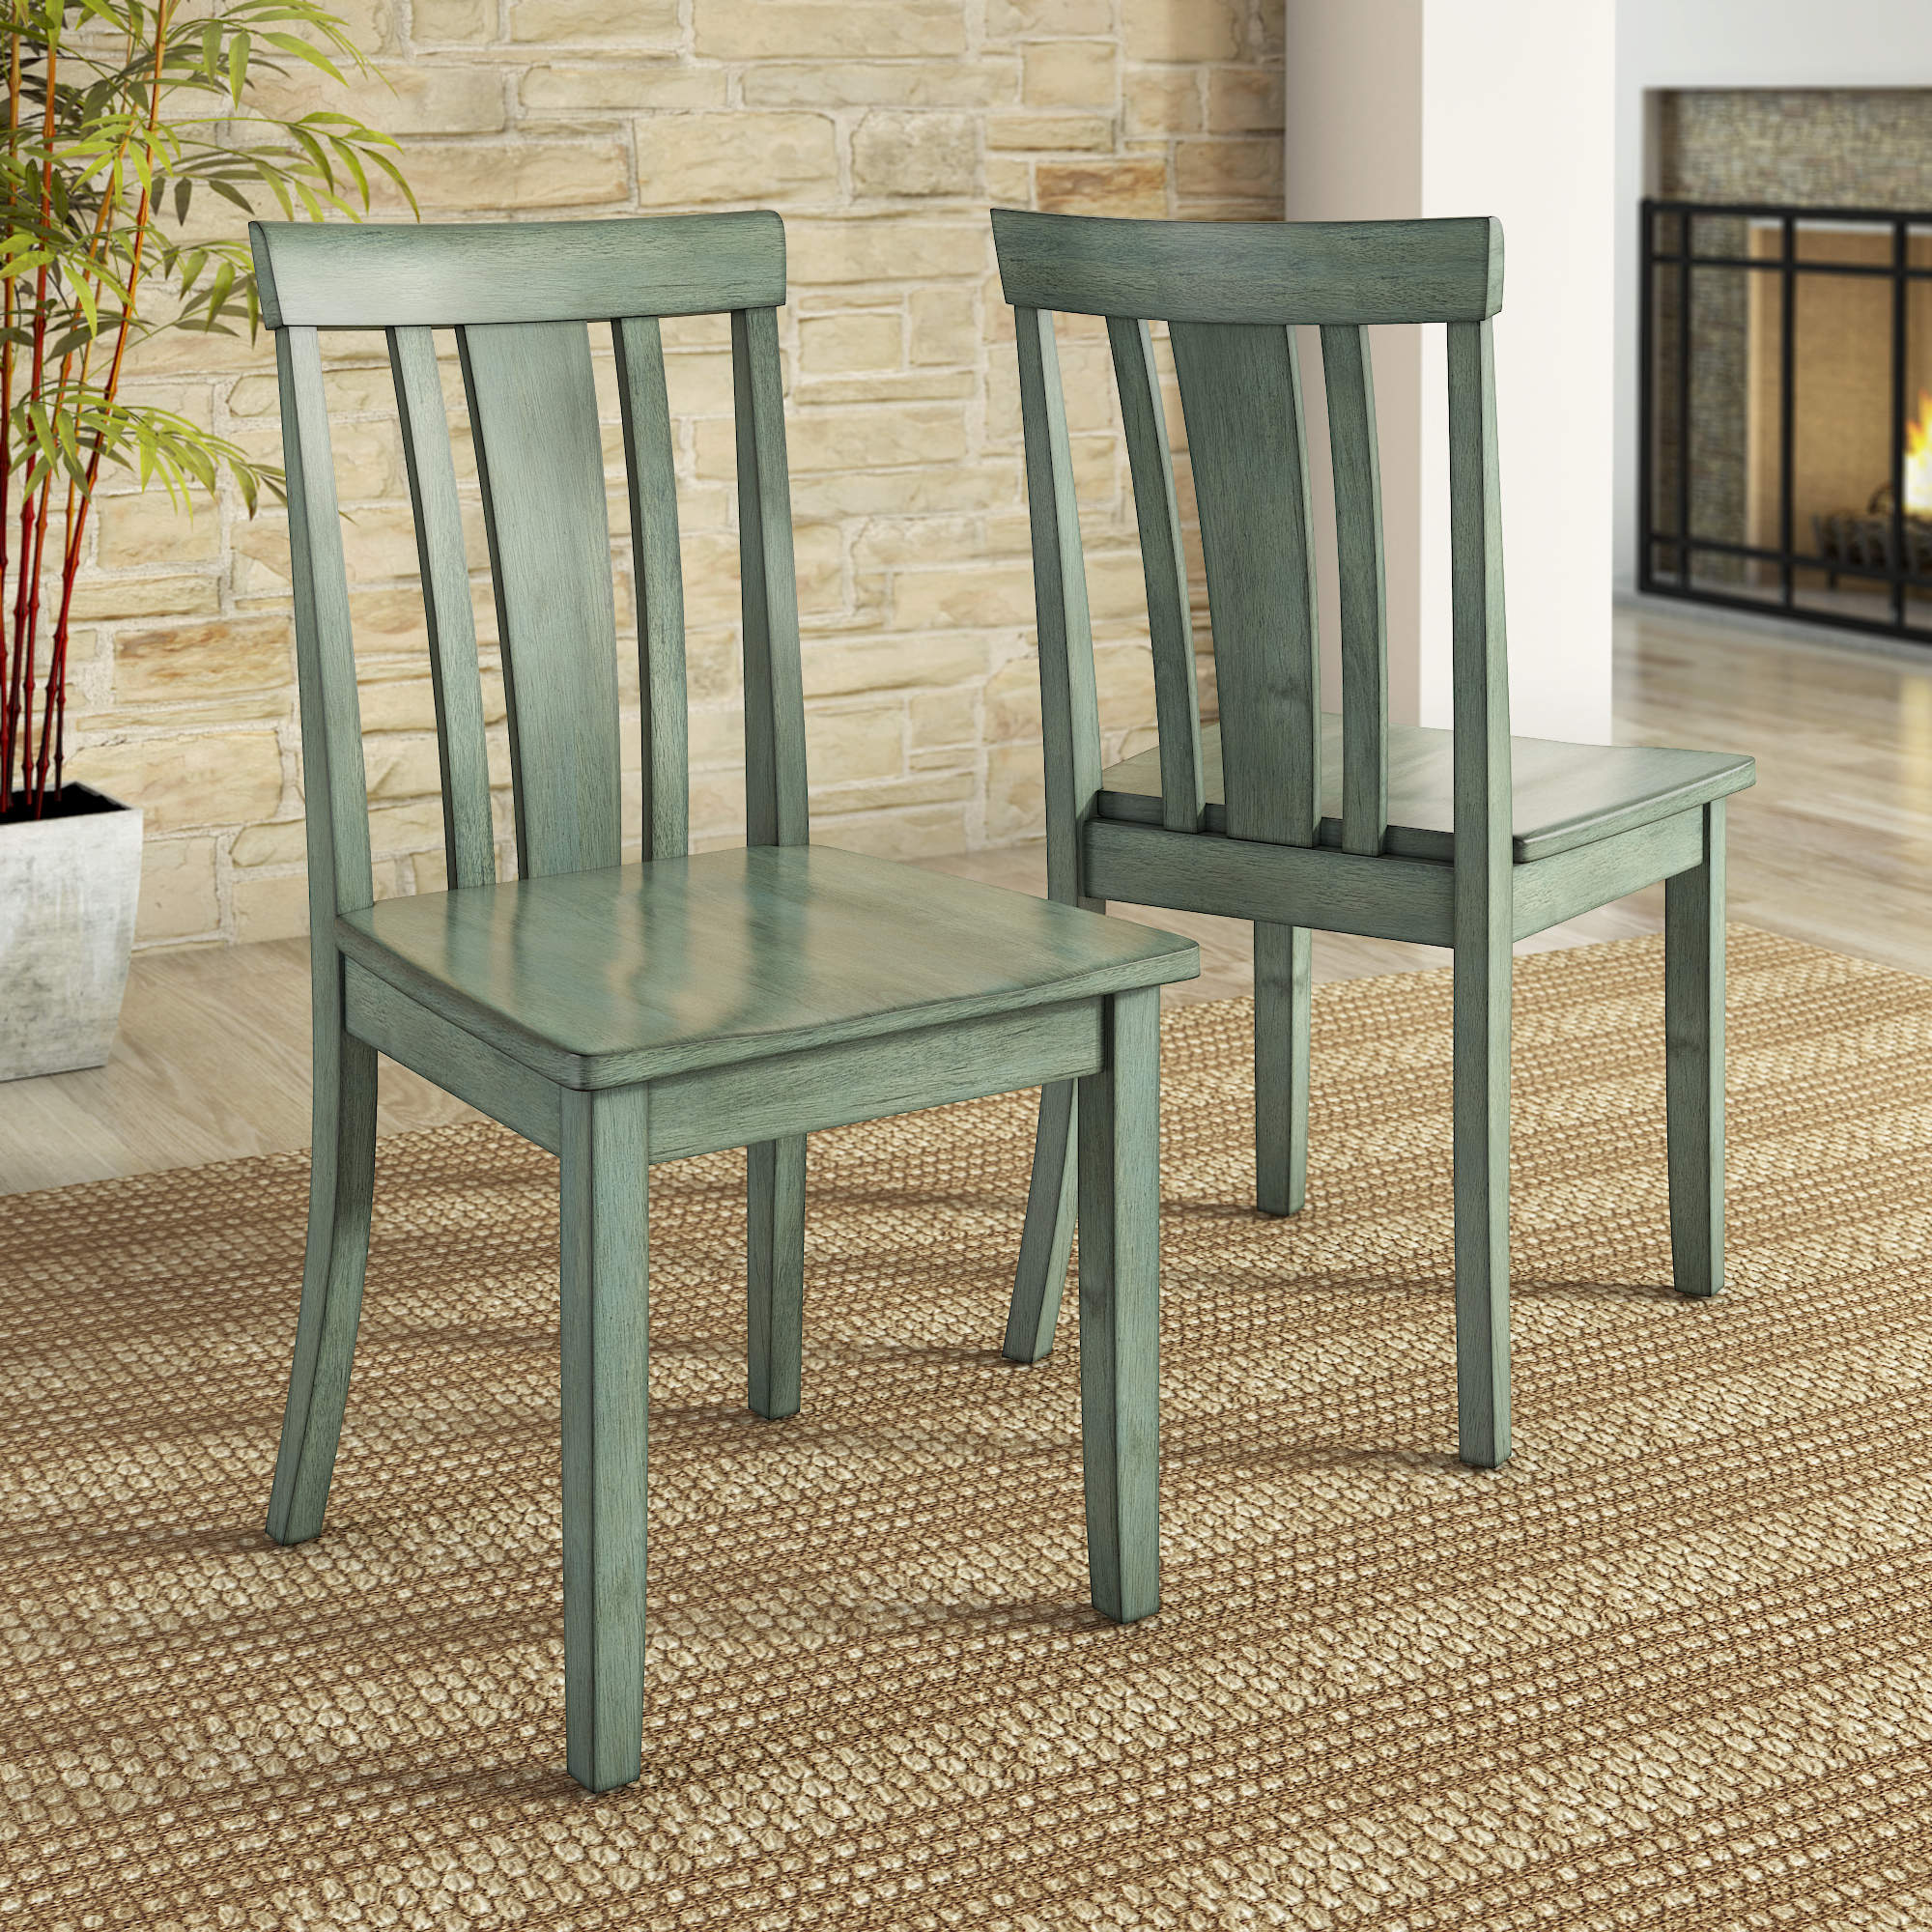 Slat Back Wood Dining Chairs (Set of 2)